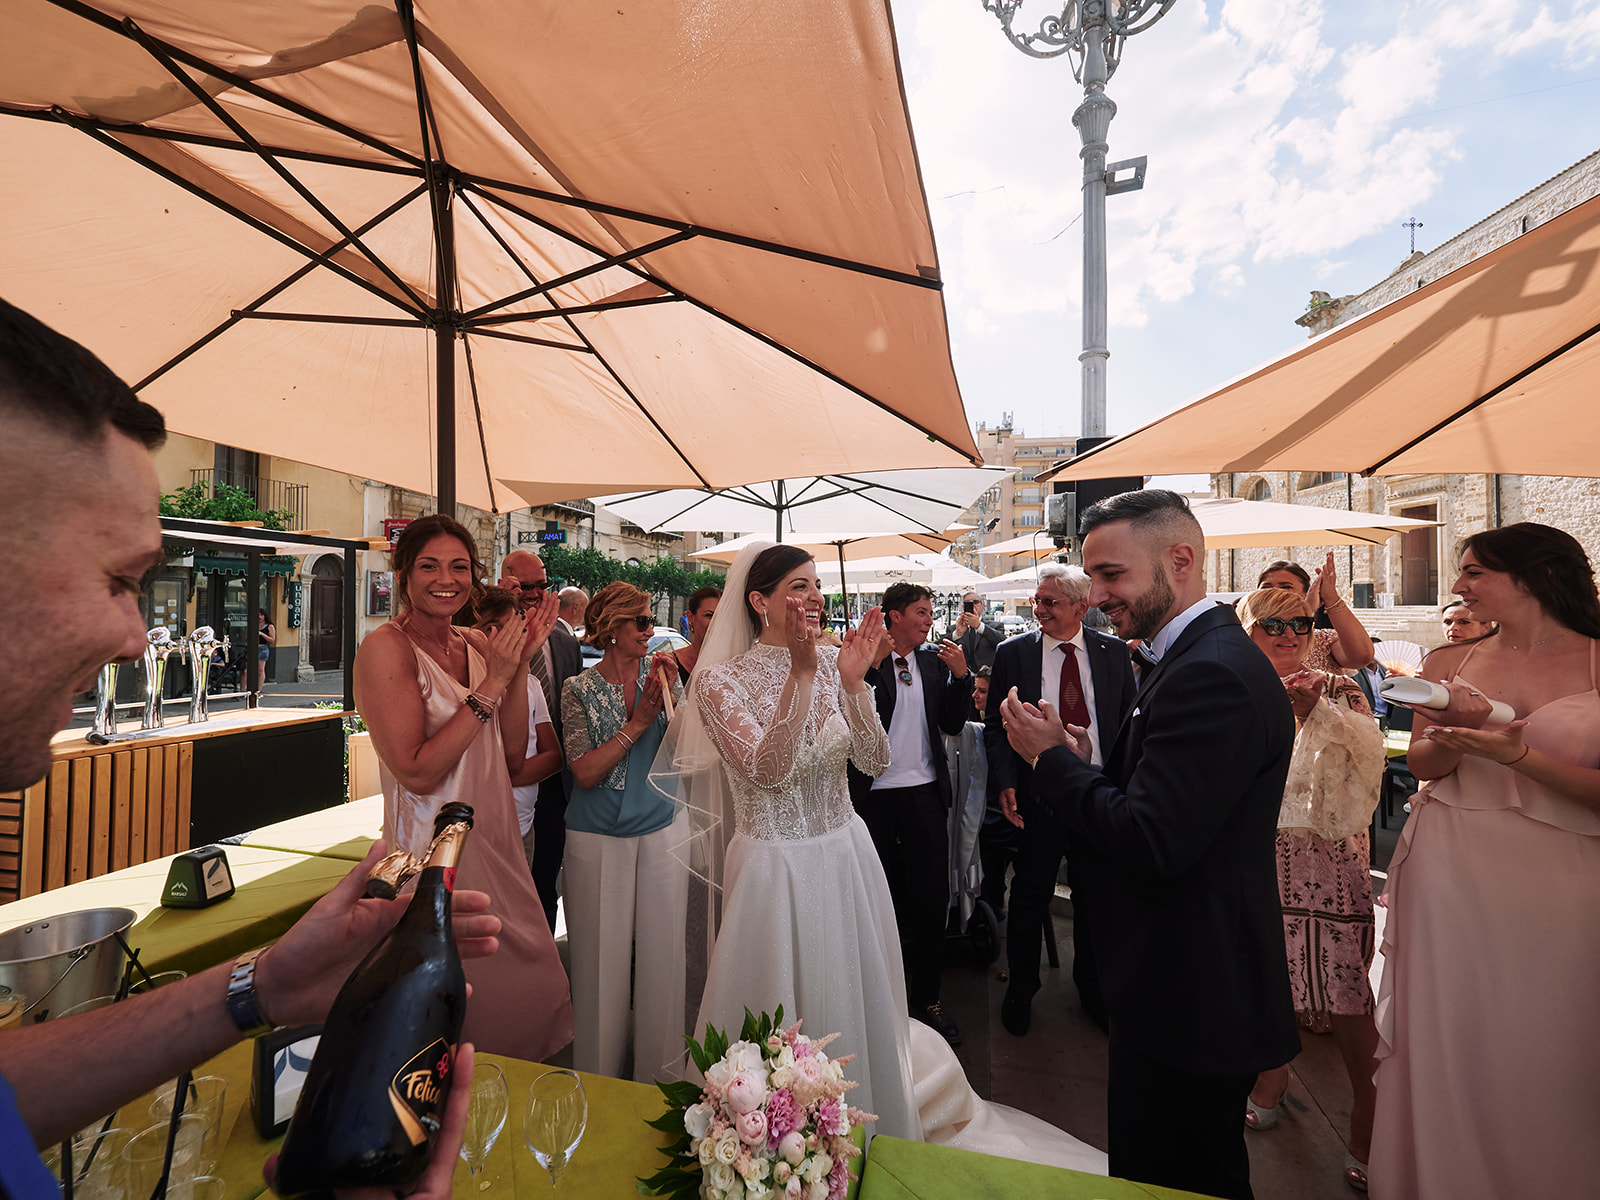 Beautiful wedding photography in Sicily by Emiliano Tidona